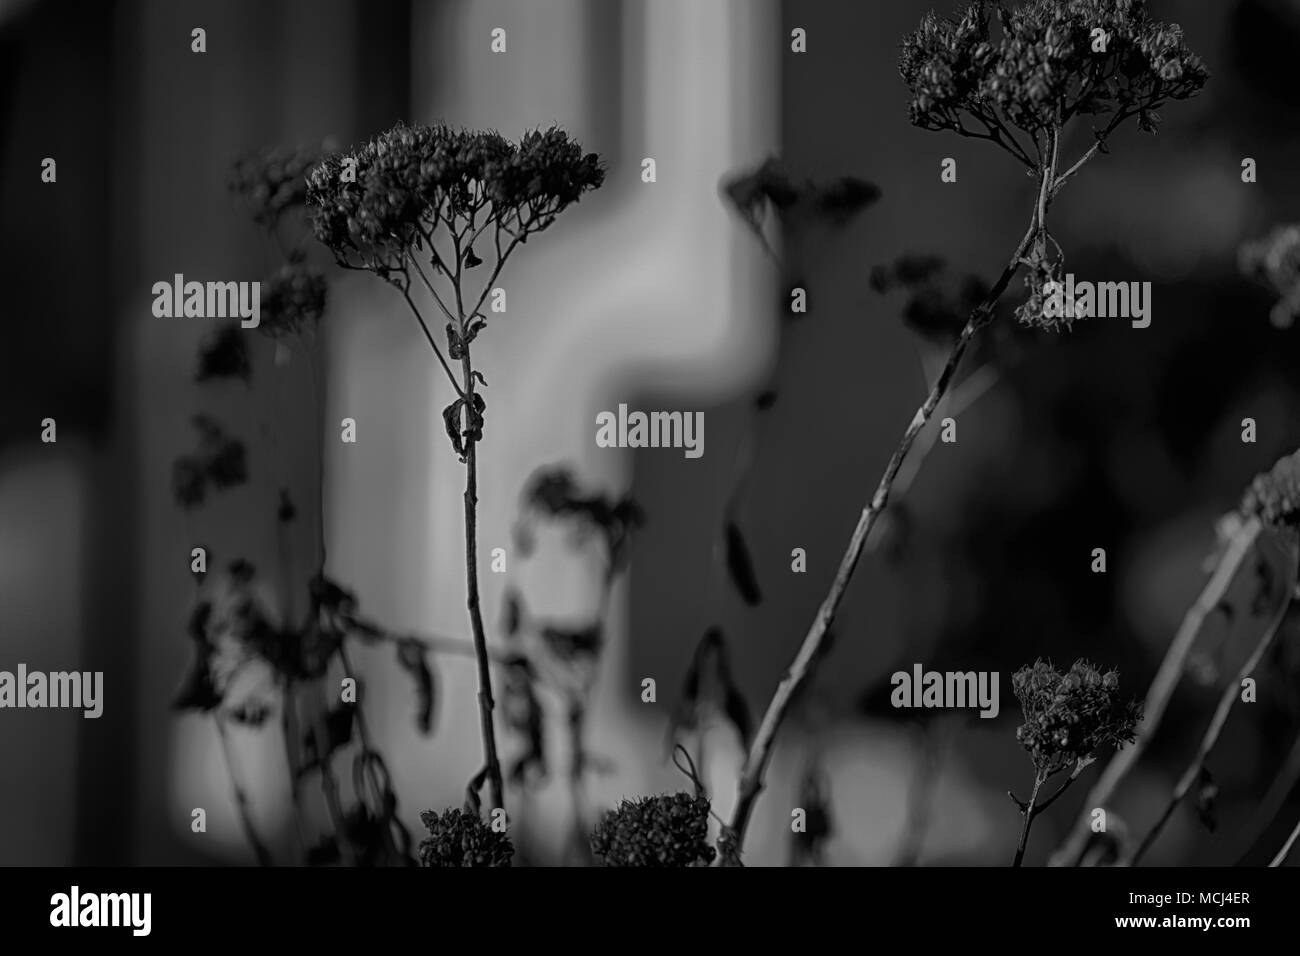 L'Ammi sec fleurs du jardin en hiver, Selective focus. Banque D'Images